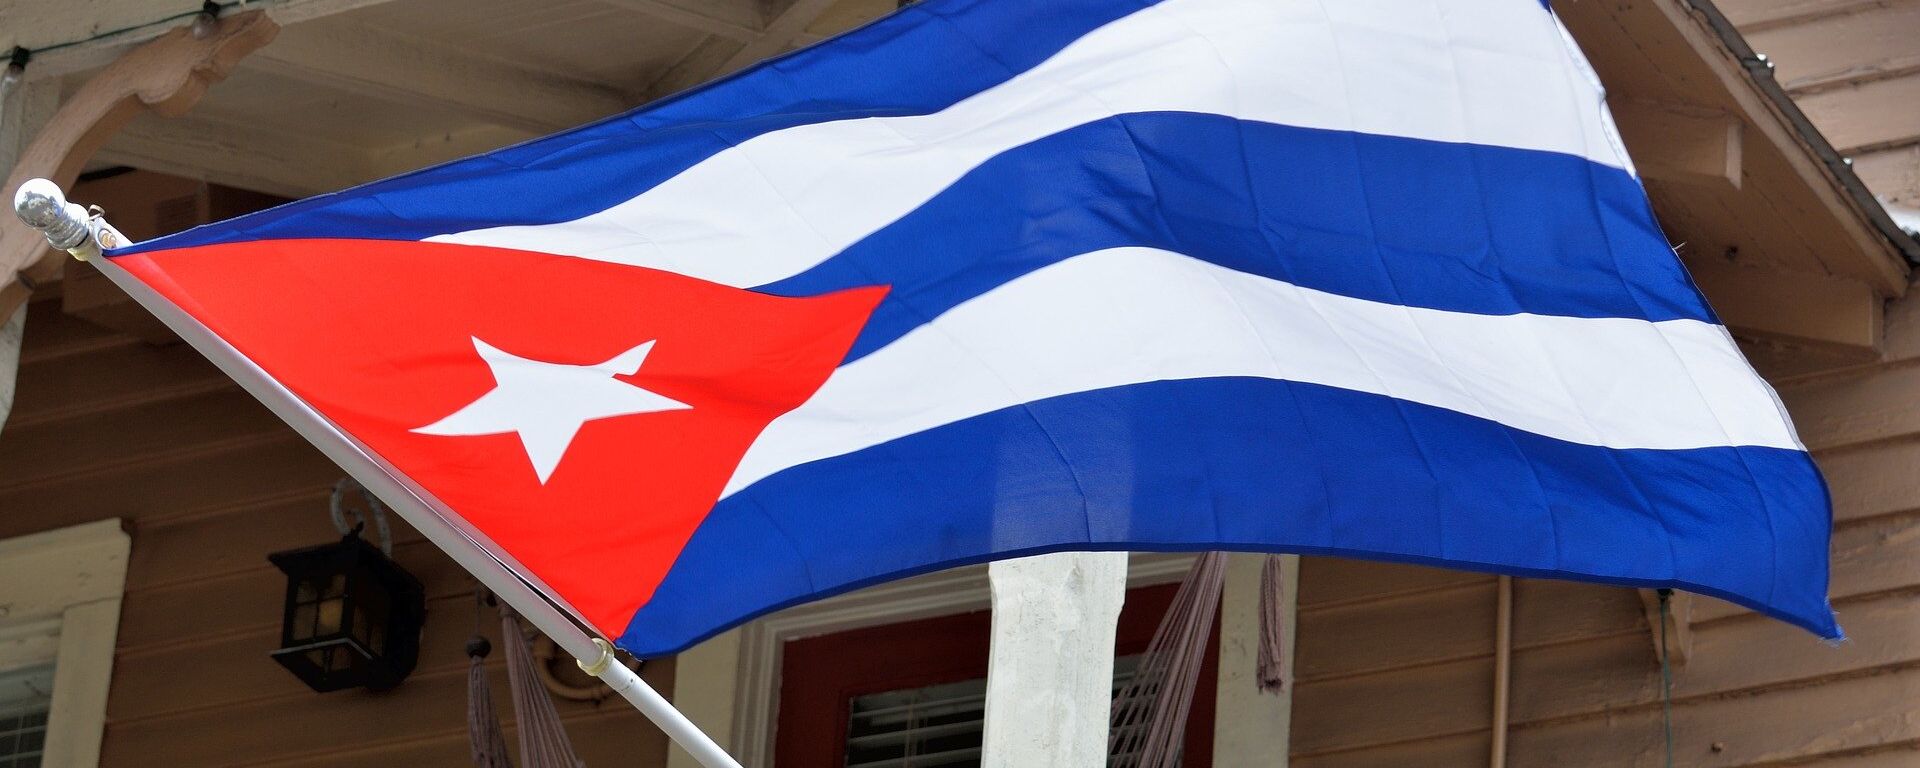 La bandera de Cuba - Sputnik Mundo, 1920, 02.02.2021